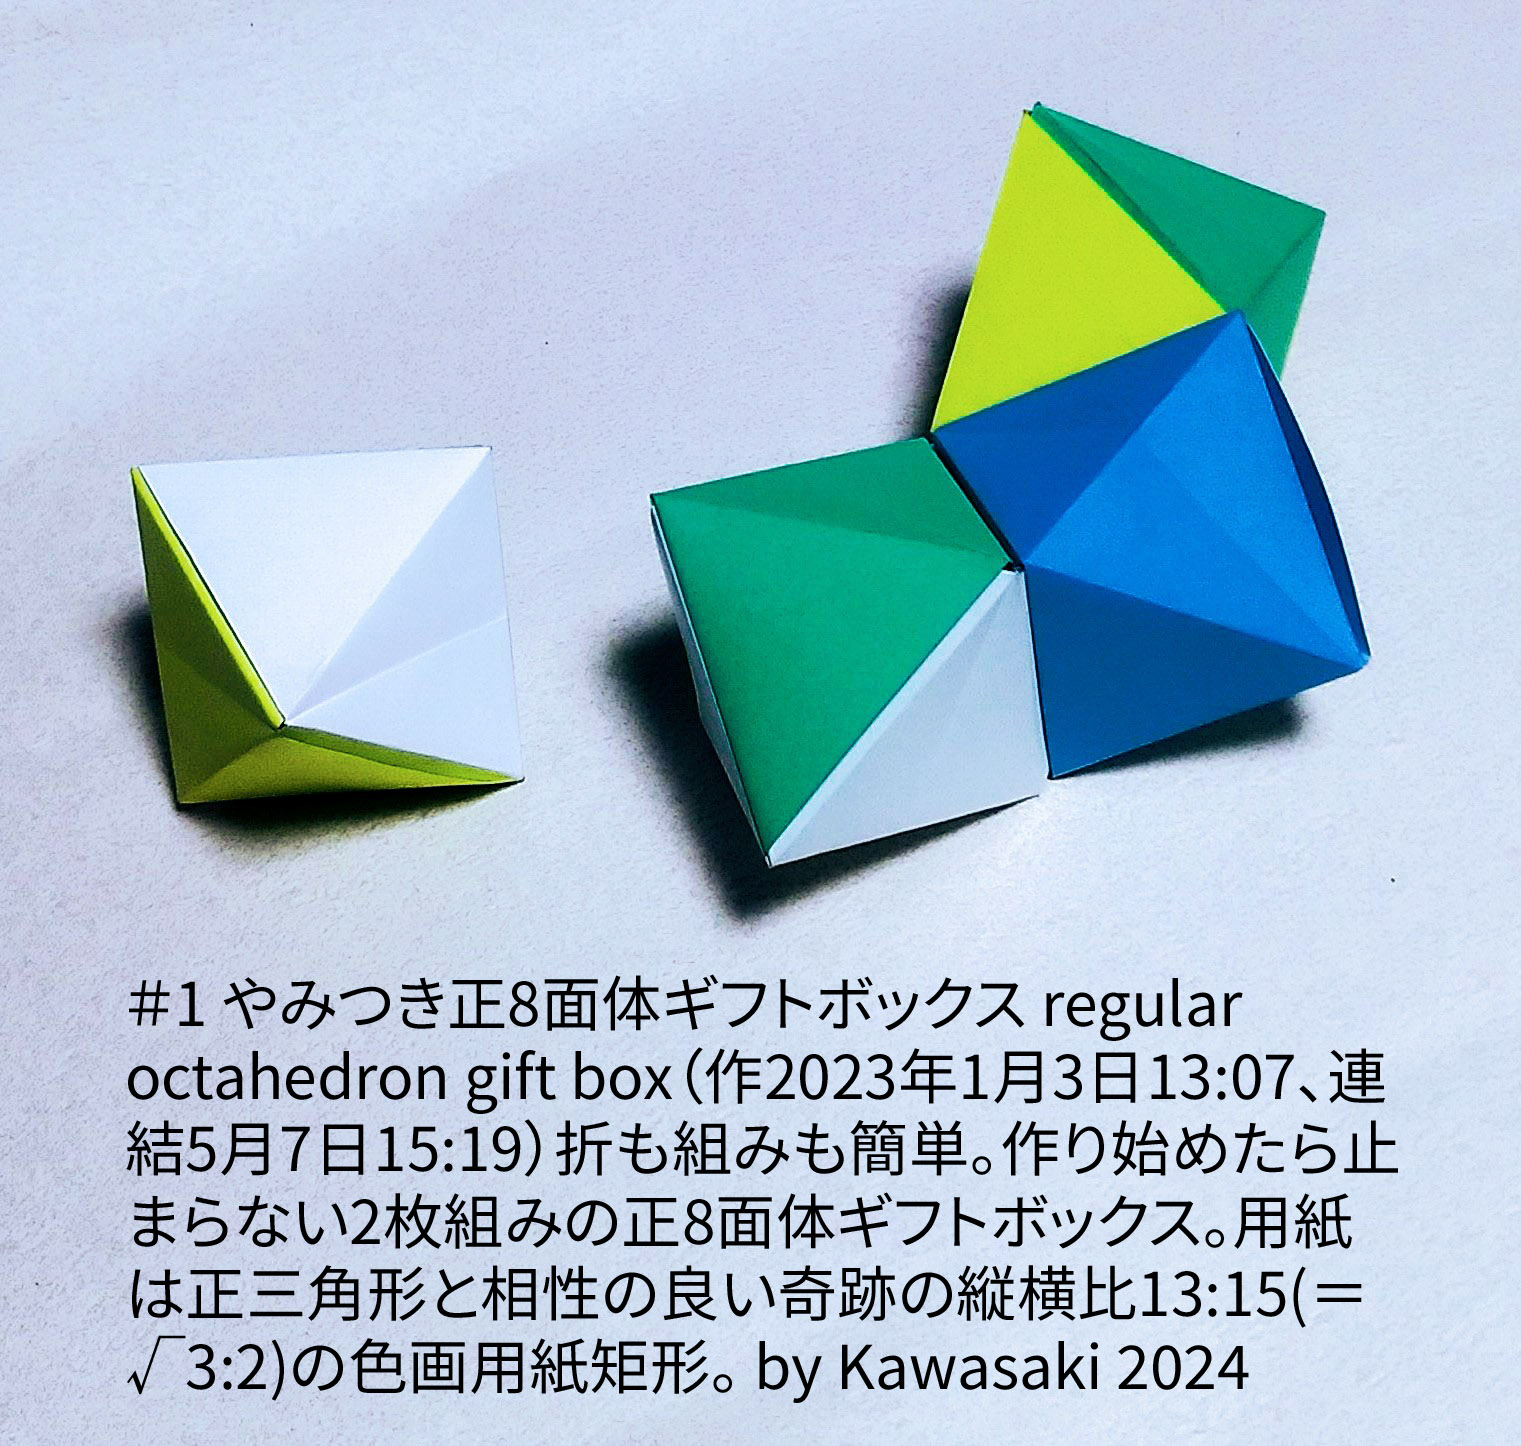 2024/05/07(Tue) 22:13「＃1 やみつき正8面体ギフトボックス regular octahedron gift box （作2023年1月3日13:07、連結5月7日15:19）」川崎敏和 T.Kawasaki
（創作者 Author：川崎敏和 T.Kawasaki,　製作者 Folder：川崎敏和 T.Kawasaki ,　出典 Source：2024年川崎敏和折り紙キット＃1）
 折りも組みも簡単。折り目だしたら止まらない2枚組みの正8面体ギフトボックス。用紙は正三角形と相性の良い奇跡の縦横比13:15(＝√3:2)の色画用紙矩形。 by Kawasaki 2024